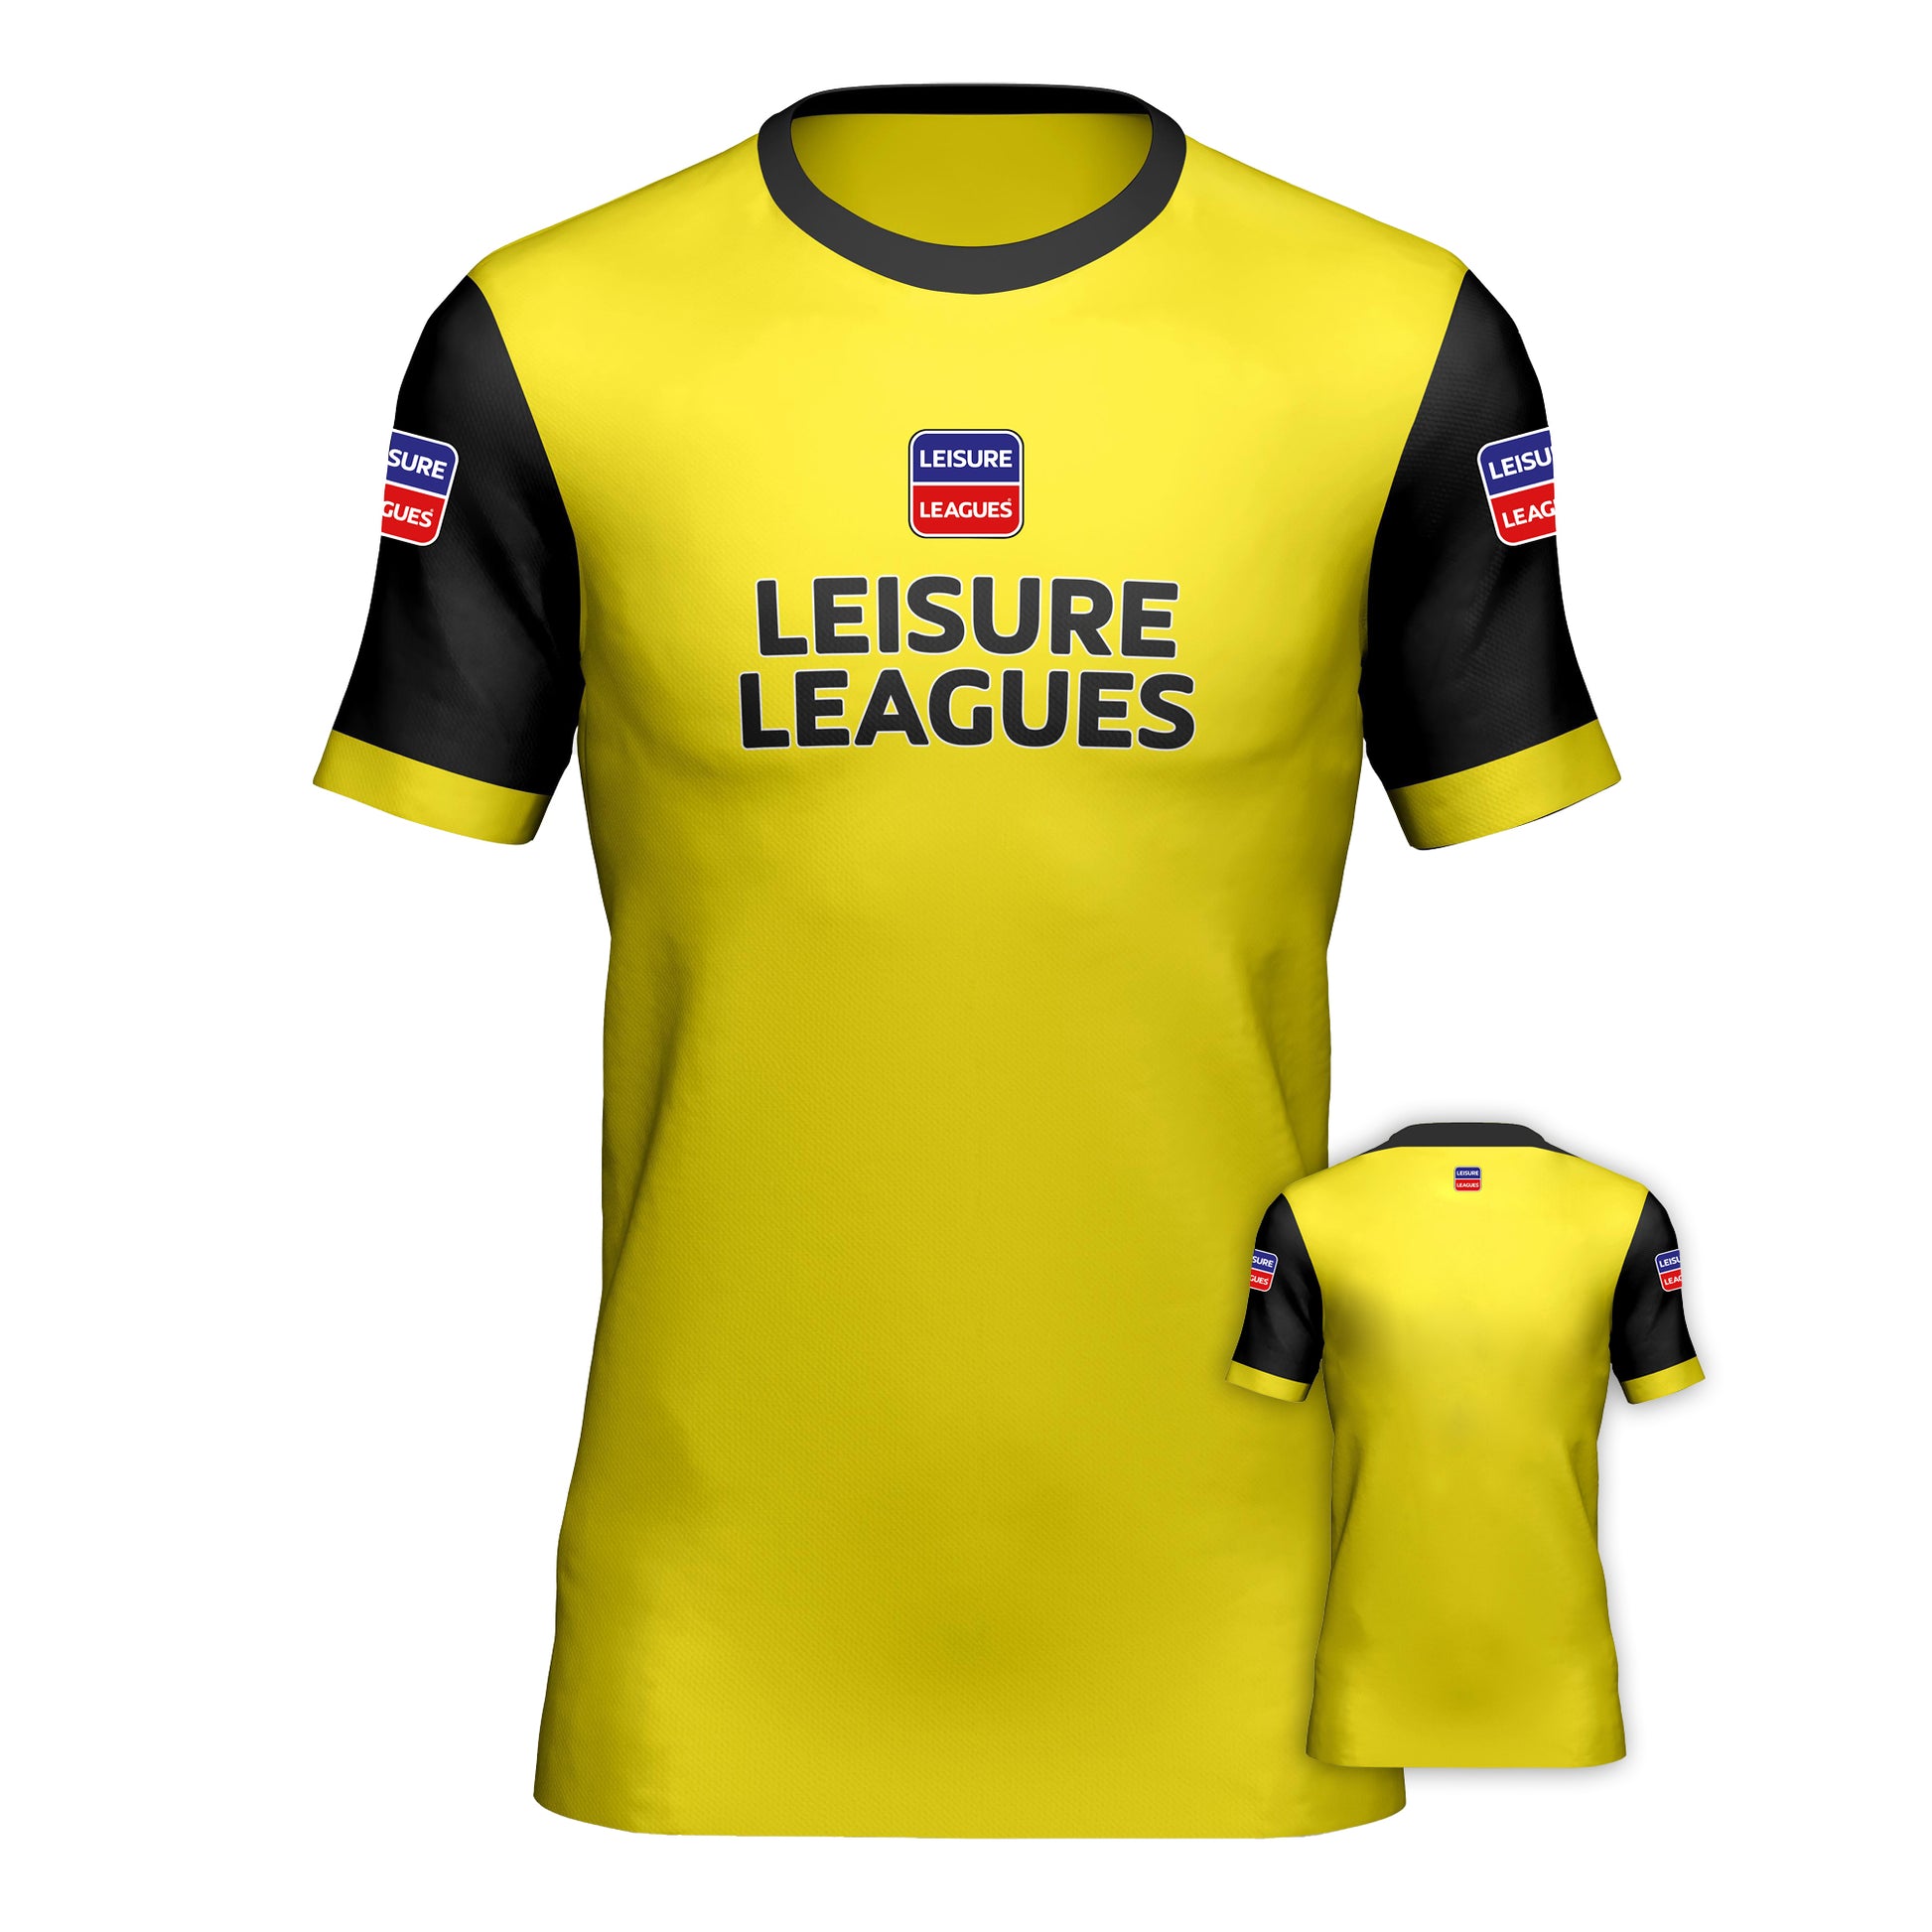 Football Shirt Leisure Leagues Kit Team Tshirt Dortmund Yellow